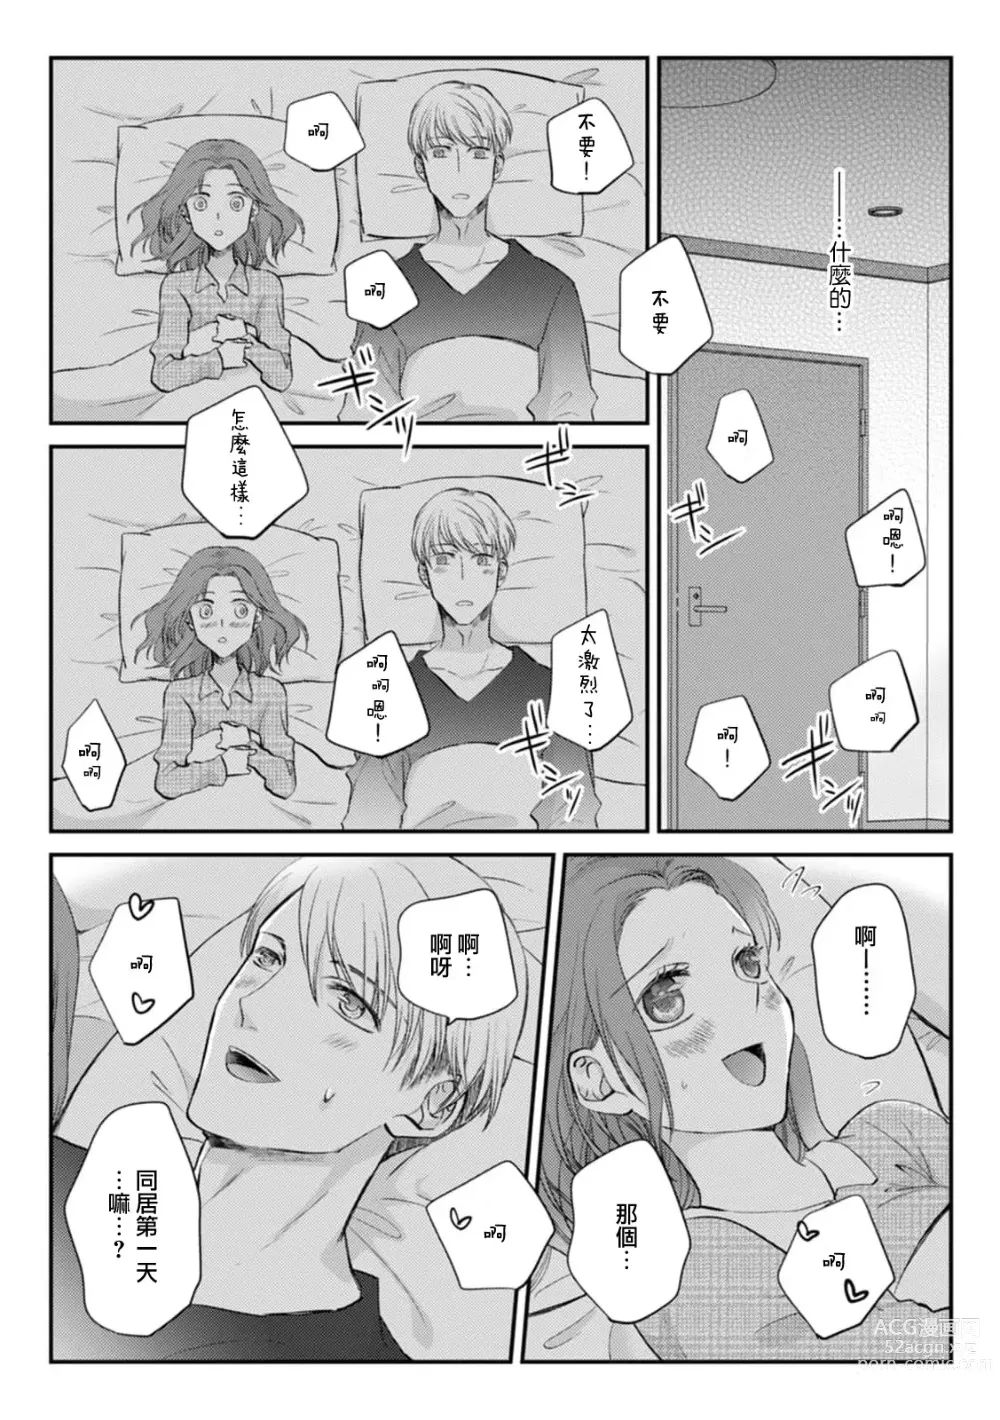 Page 5 of manga 和同居男友久违的H太爽了!忍不住大叫出来…!!